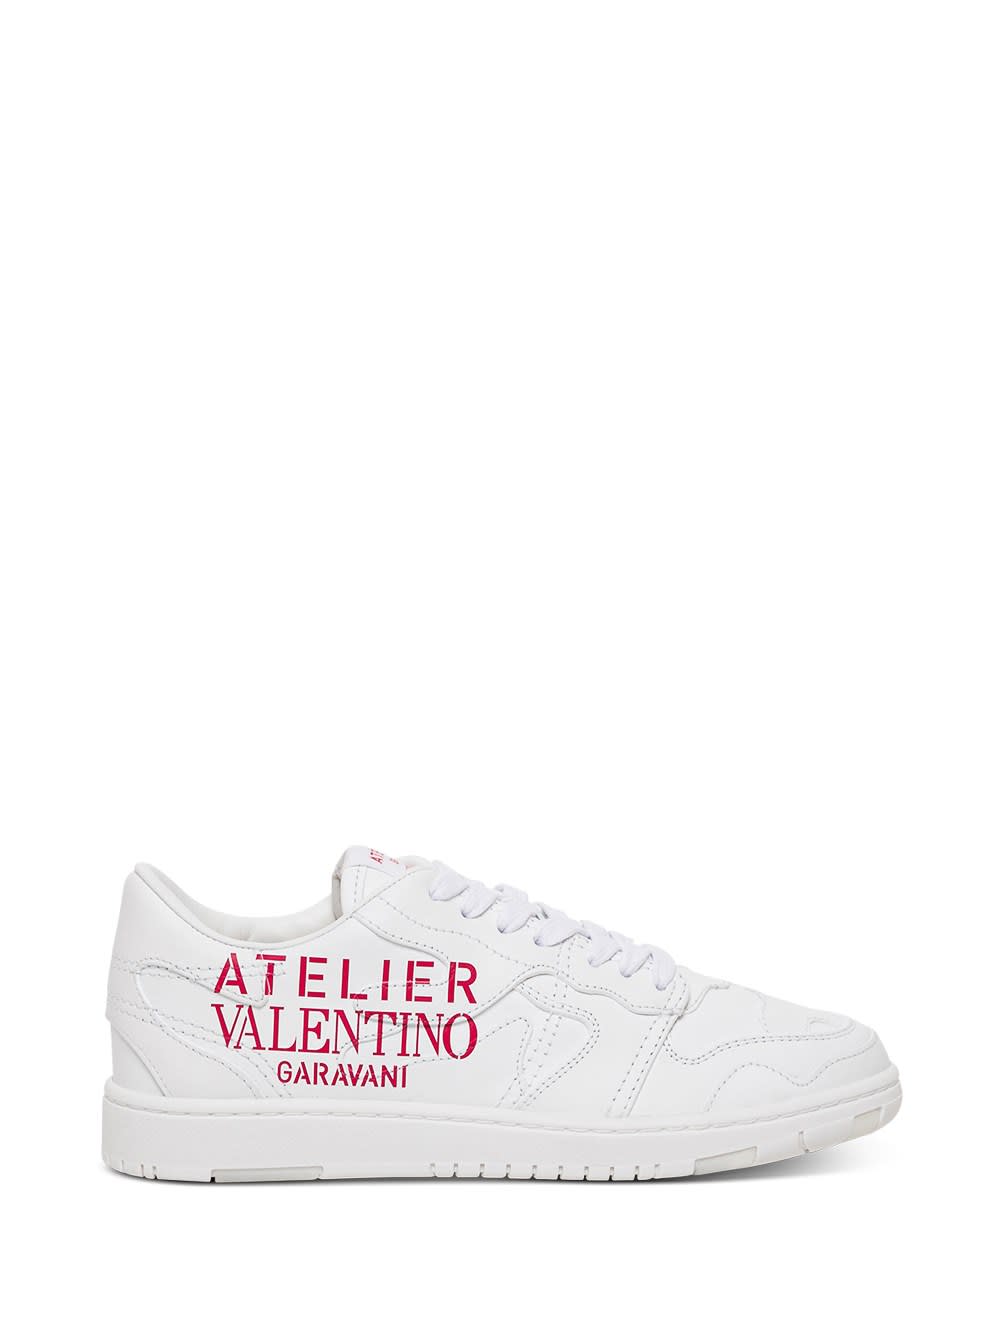 Valentino Garavani Low Top Atelier Edition Sneakers In White Leather